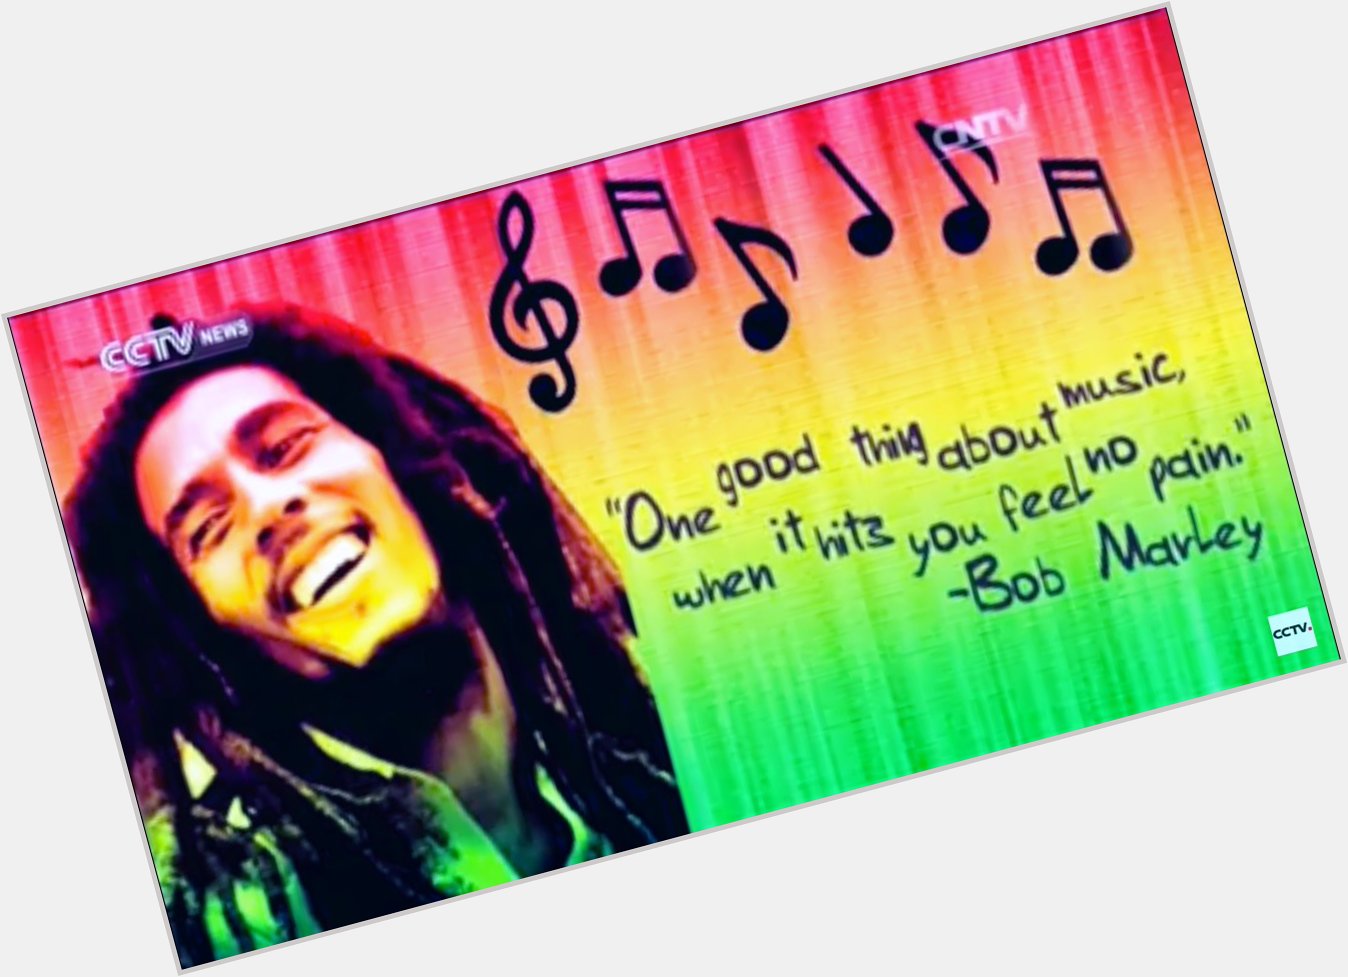 Happy Birthday Bob Marley   